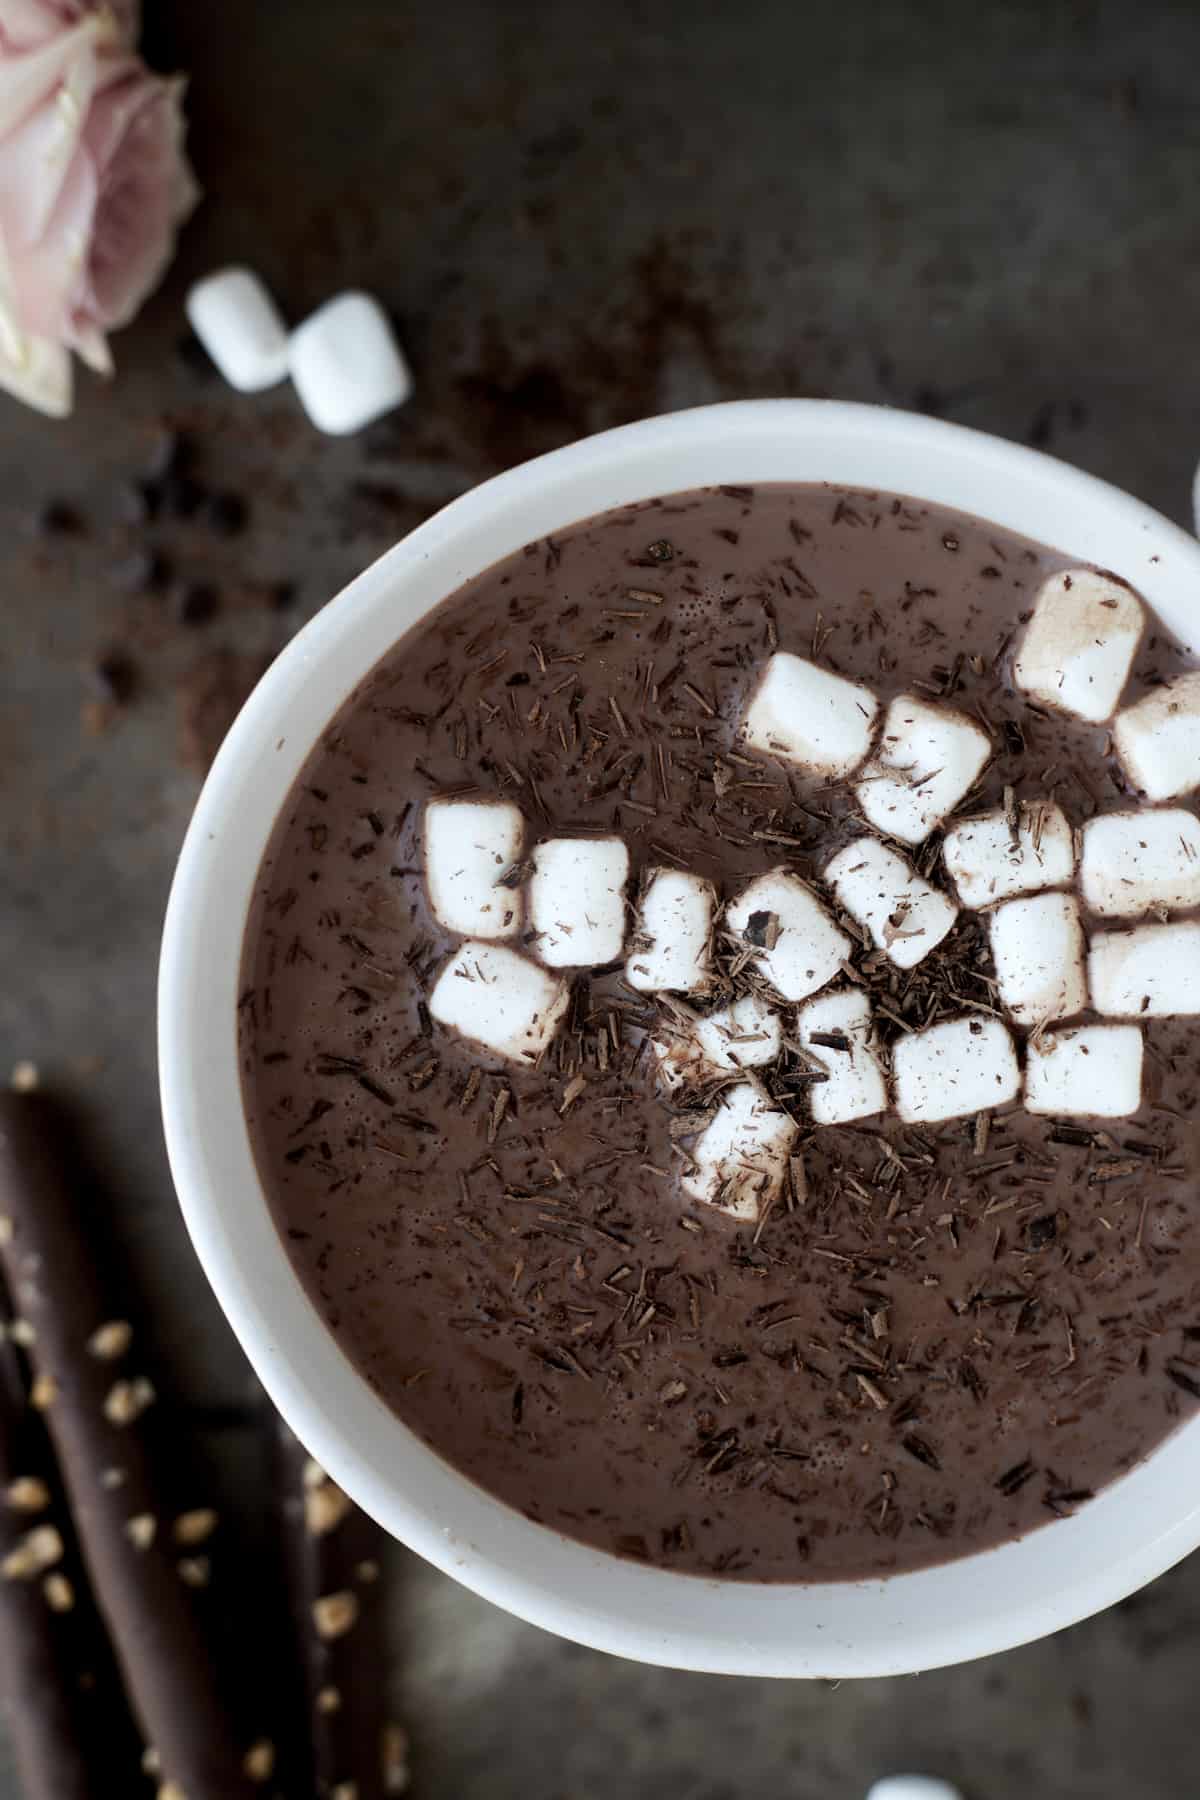 https://www.fooddolls.com/wp-content/uploads/2021/01/Slow-cooker-hot-chocolate6749.jpg